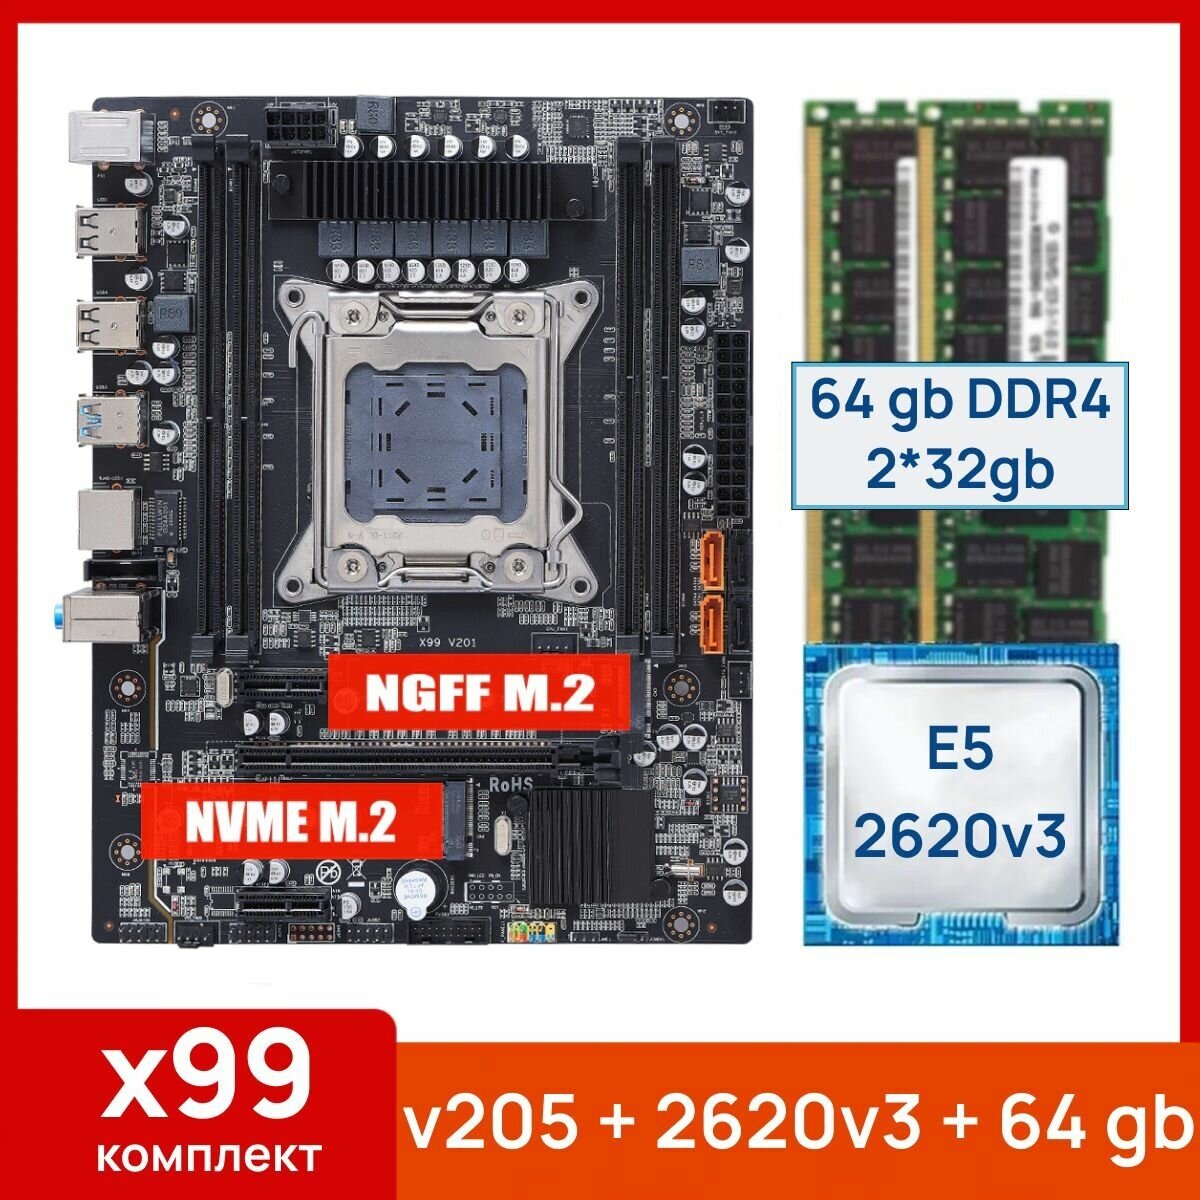 Комплект: Atermiter x99 v205 + Xeon E5 2620v3 + 64 gb(2x32gb) DDR4 ecc reg